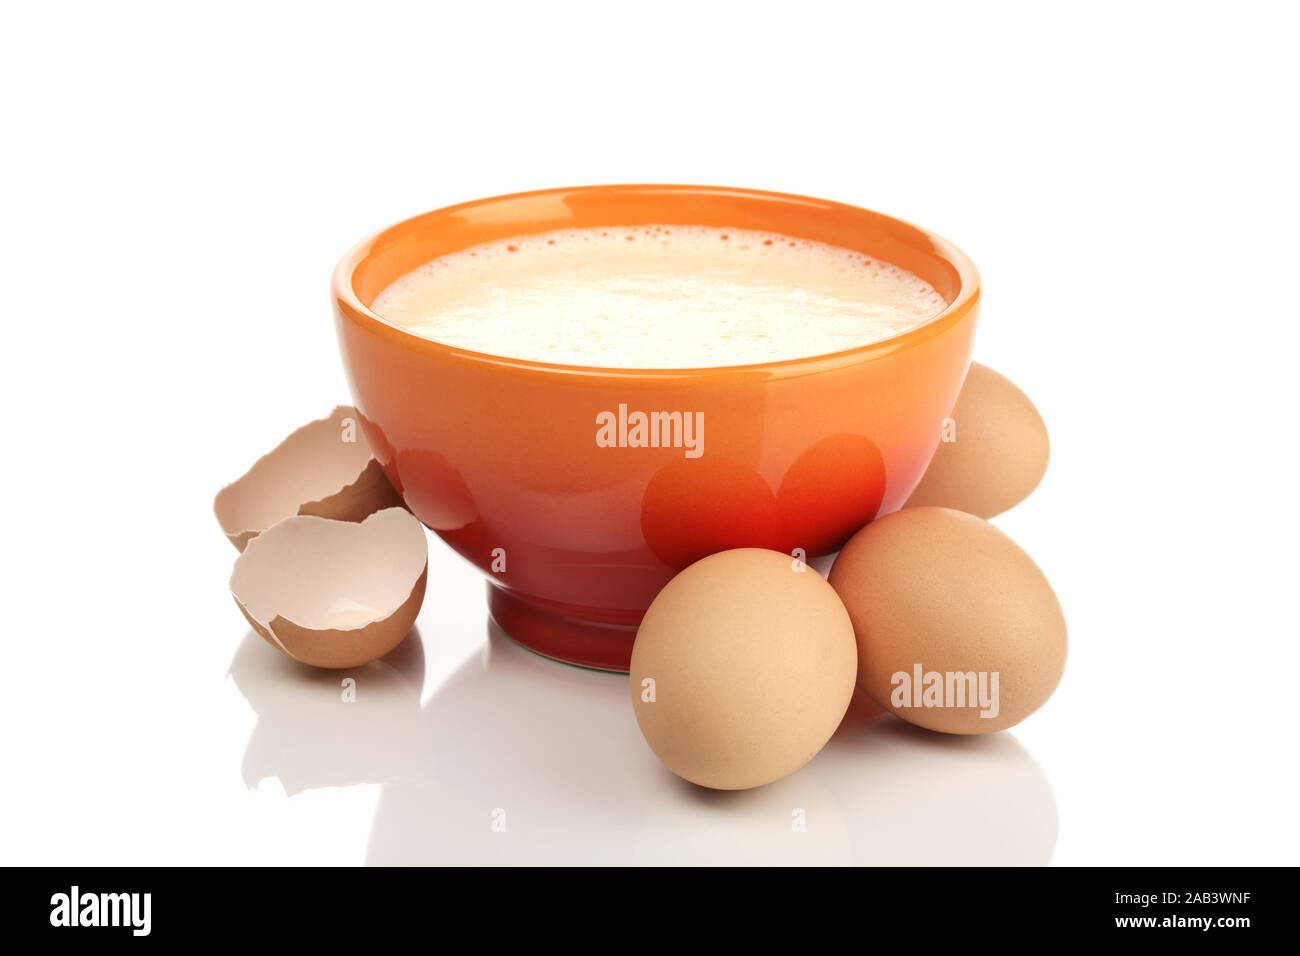 Schüssel mit Rühreier |Bowl with scrambled eggs| Stock Photo